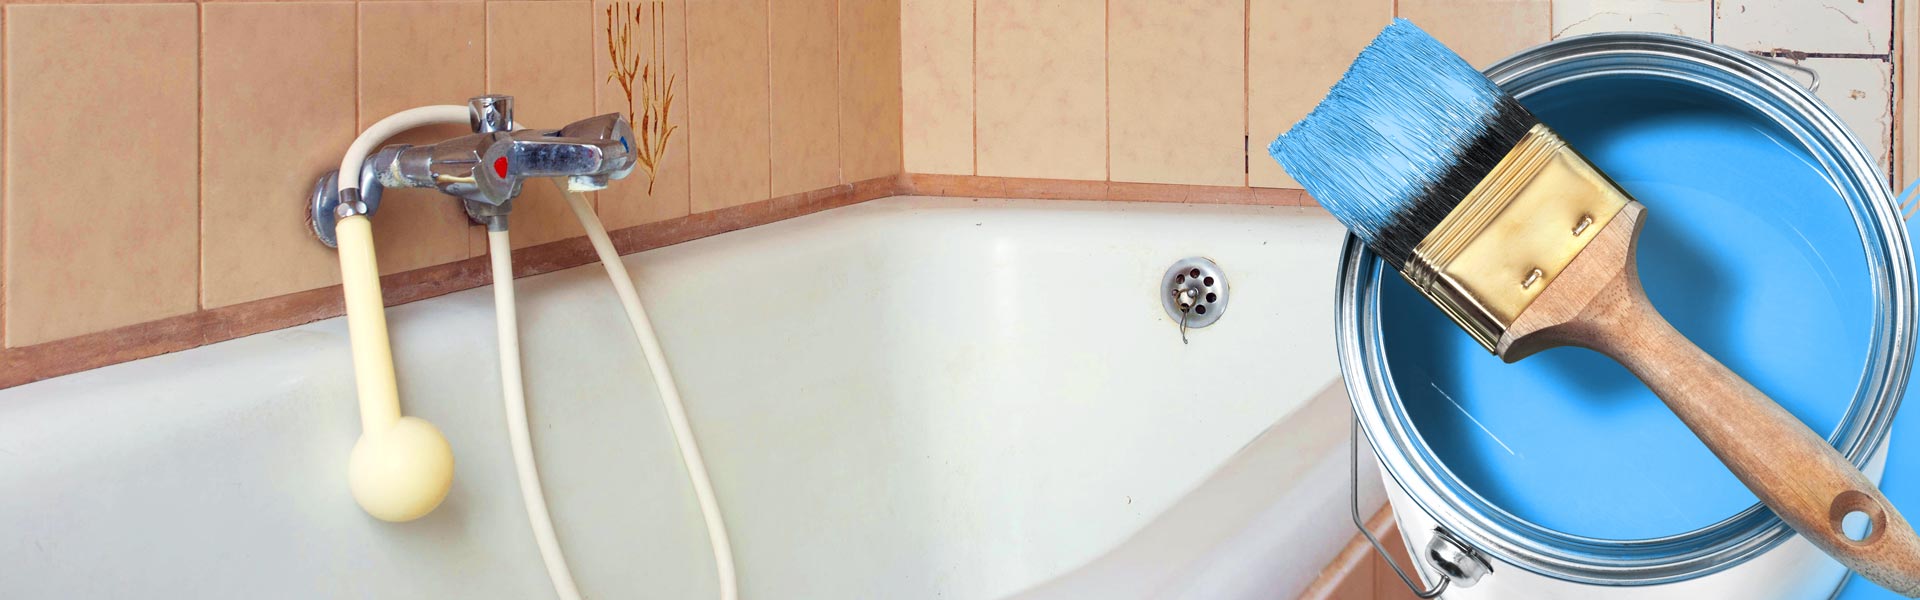 innerbath-The-Hassles-of-Repainting-a-Bathtub-header-image-1920x600